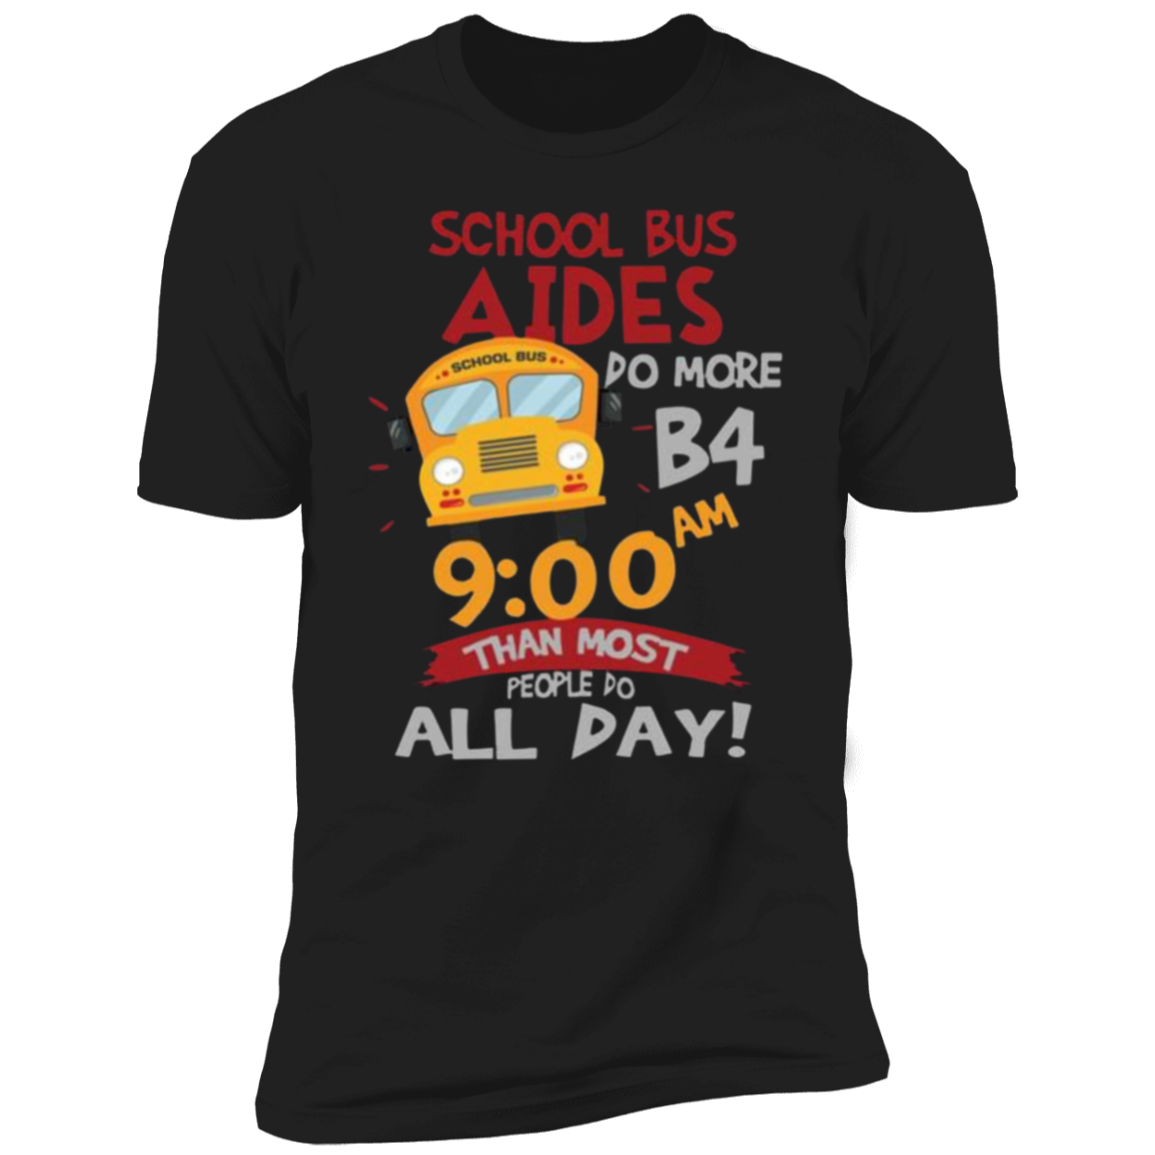 School Bus Aides do more B4! Tee